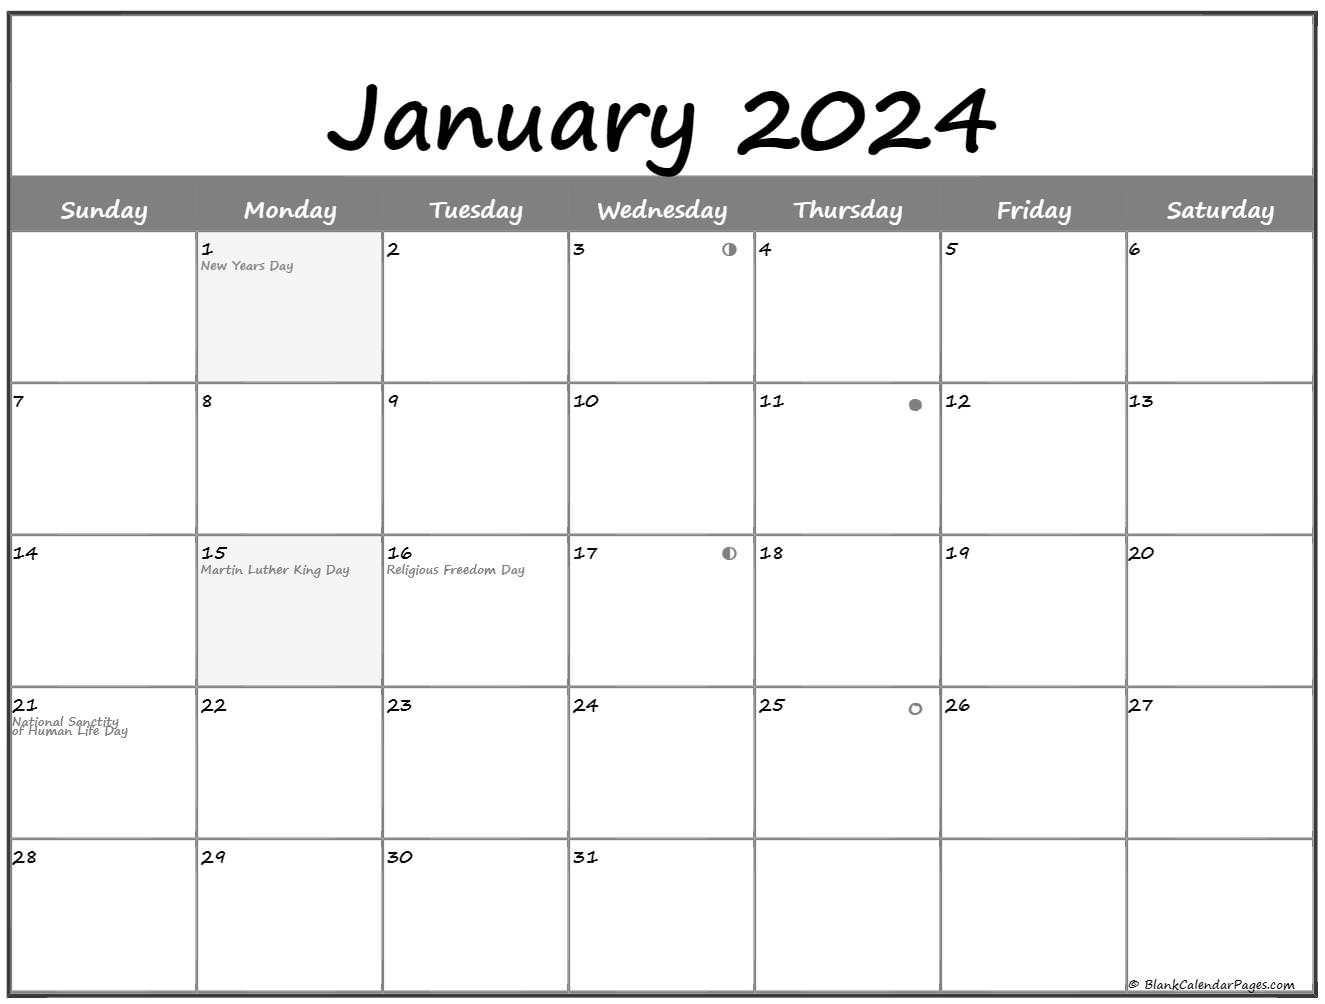 Full Moon January 2024 Philippines Calendar Perla Brandais